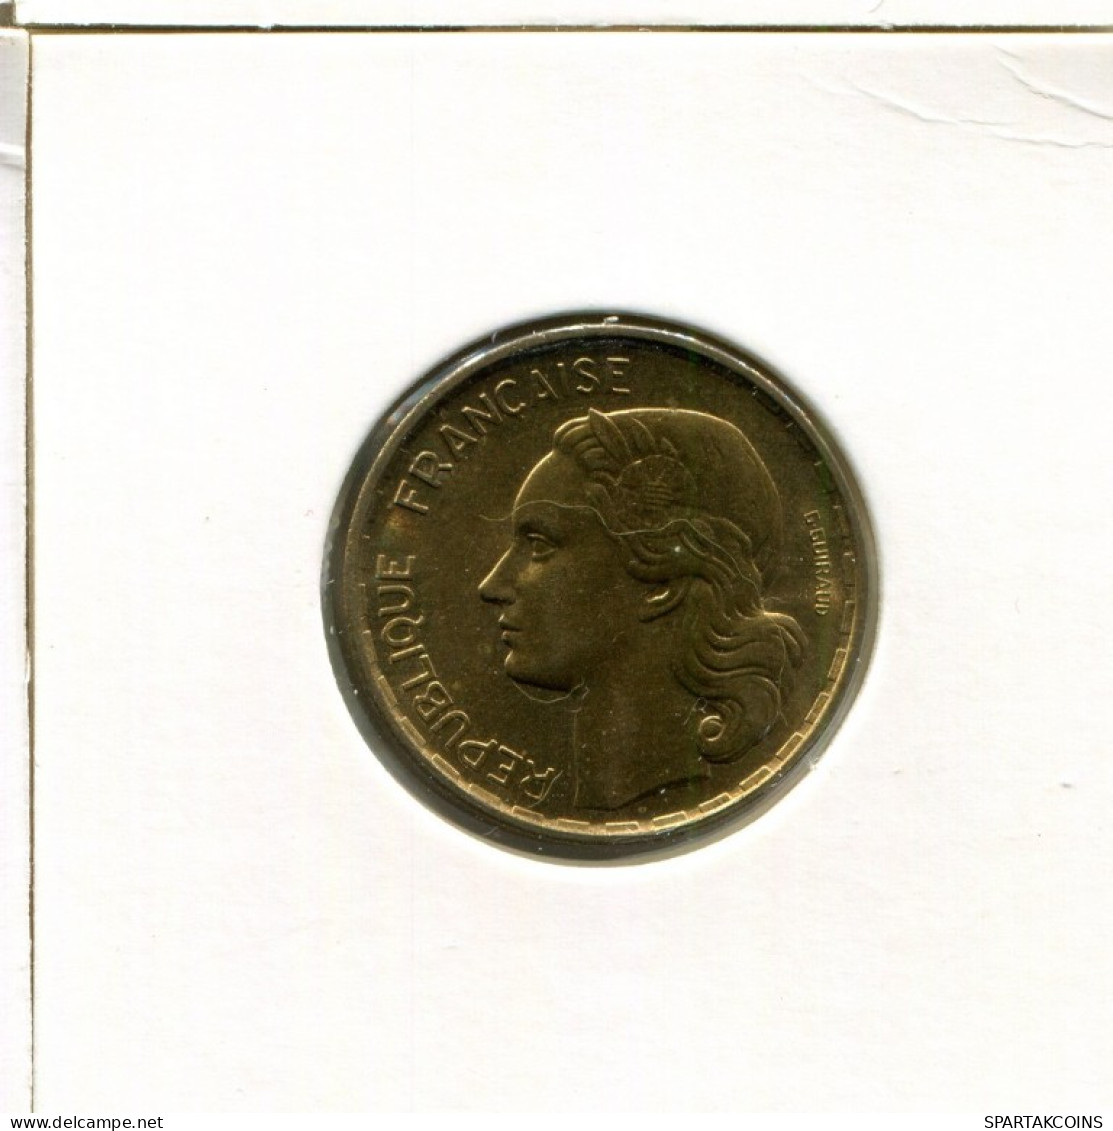 20 FRANCS 1953 B FRANCE French Coin #AK889.U.A - 20 Francs